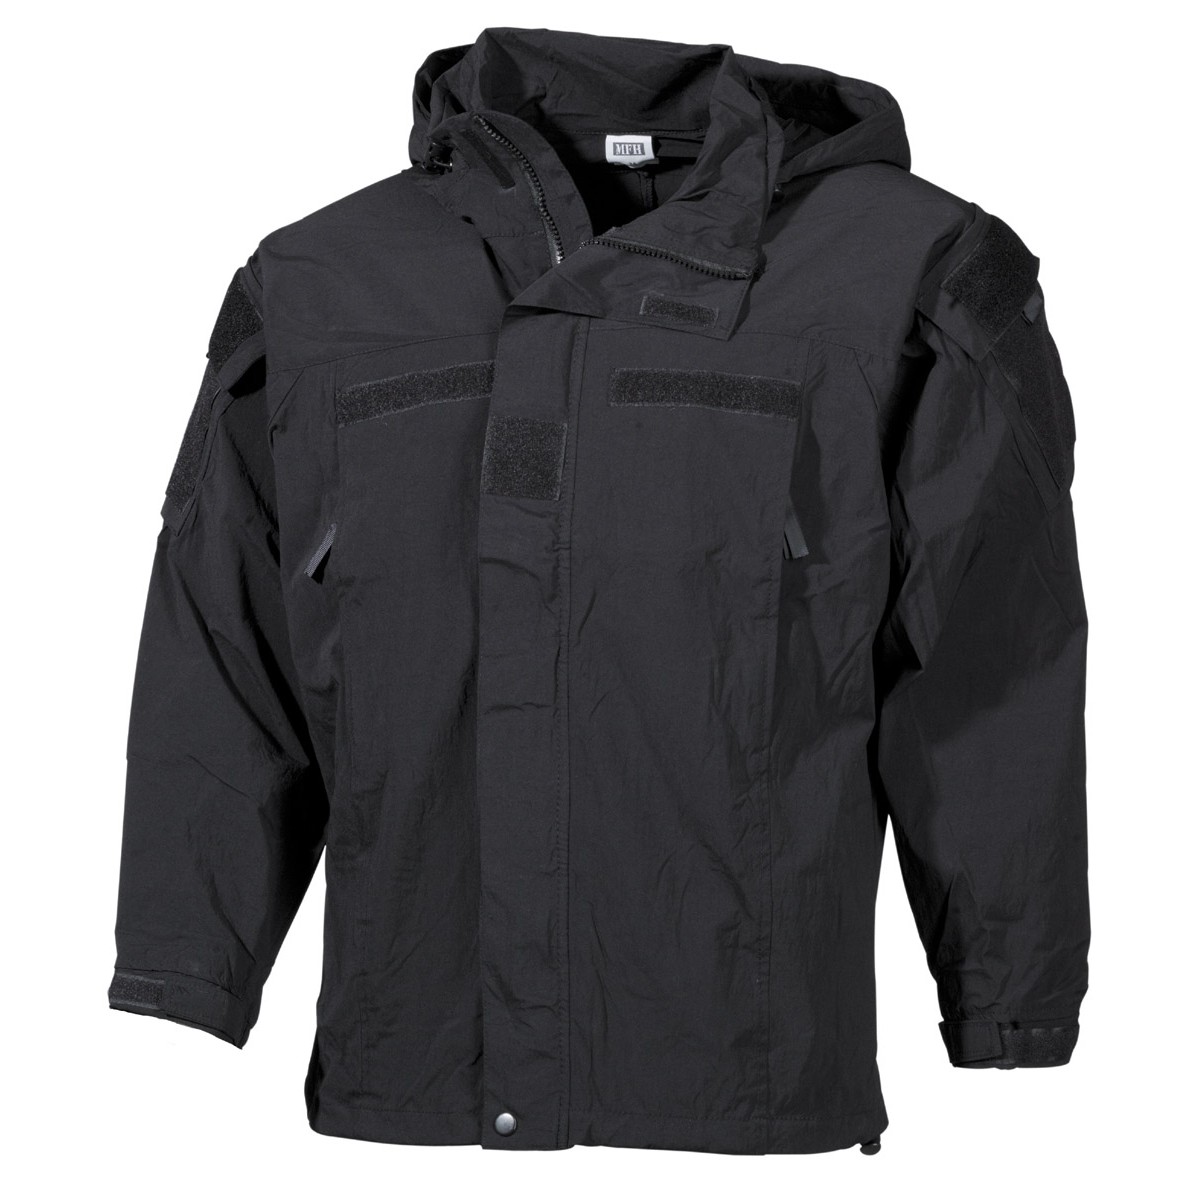 Tactical Military Soft Shell Waterproof Jacket GEN 3 - Black